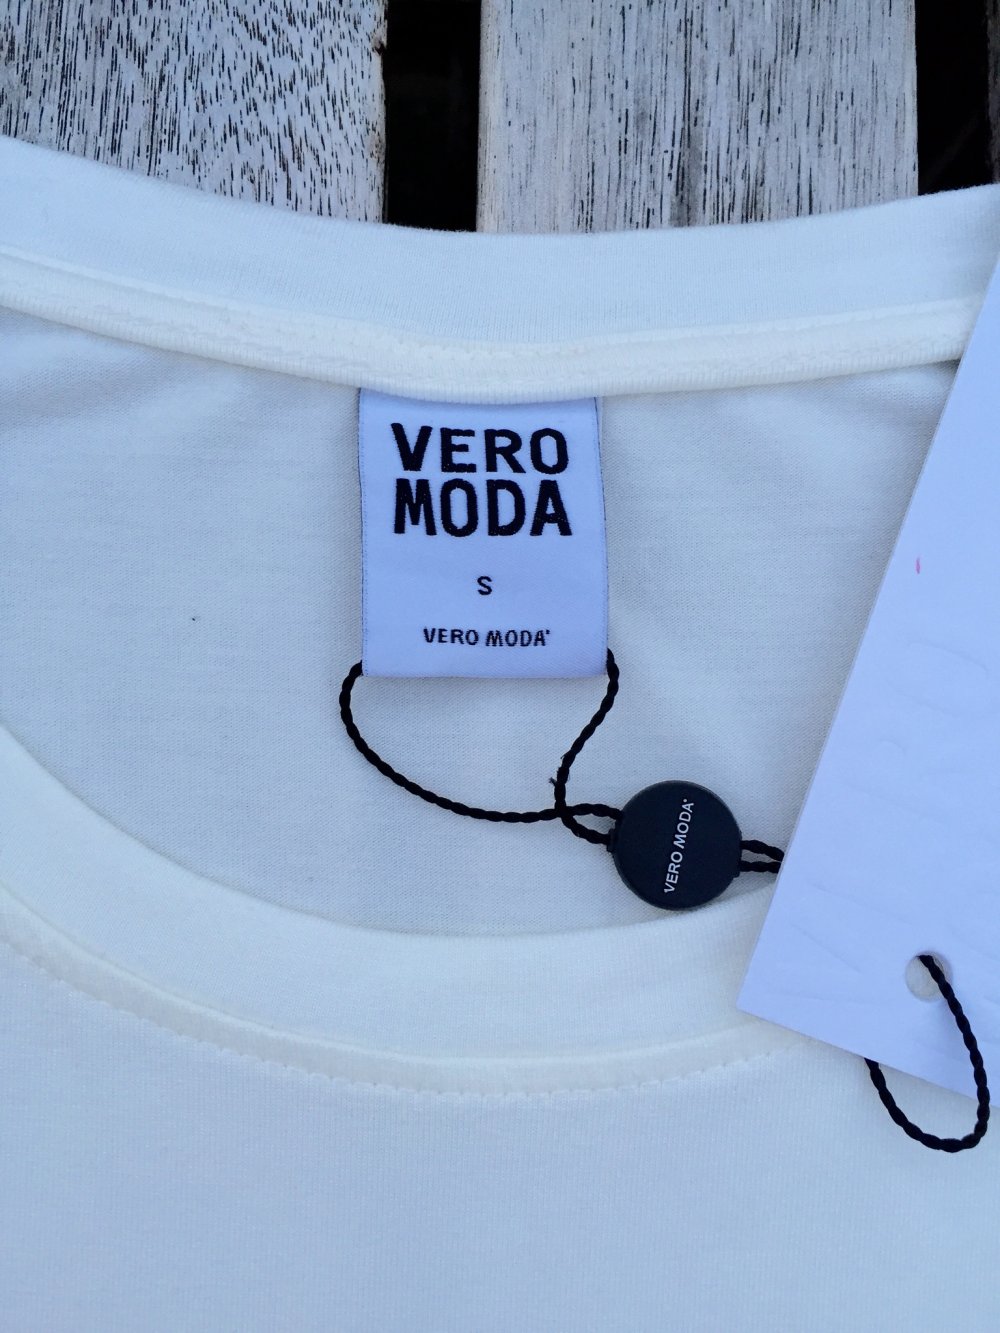 VERO MODA Tanktop Shirt Longtop #fashionfix